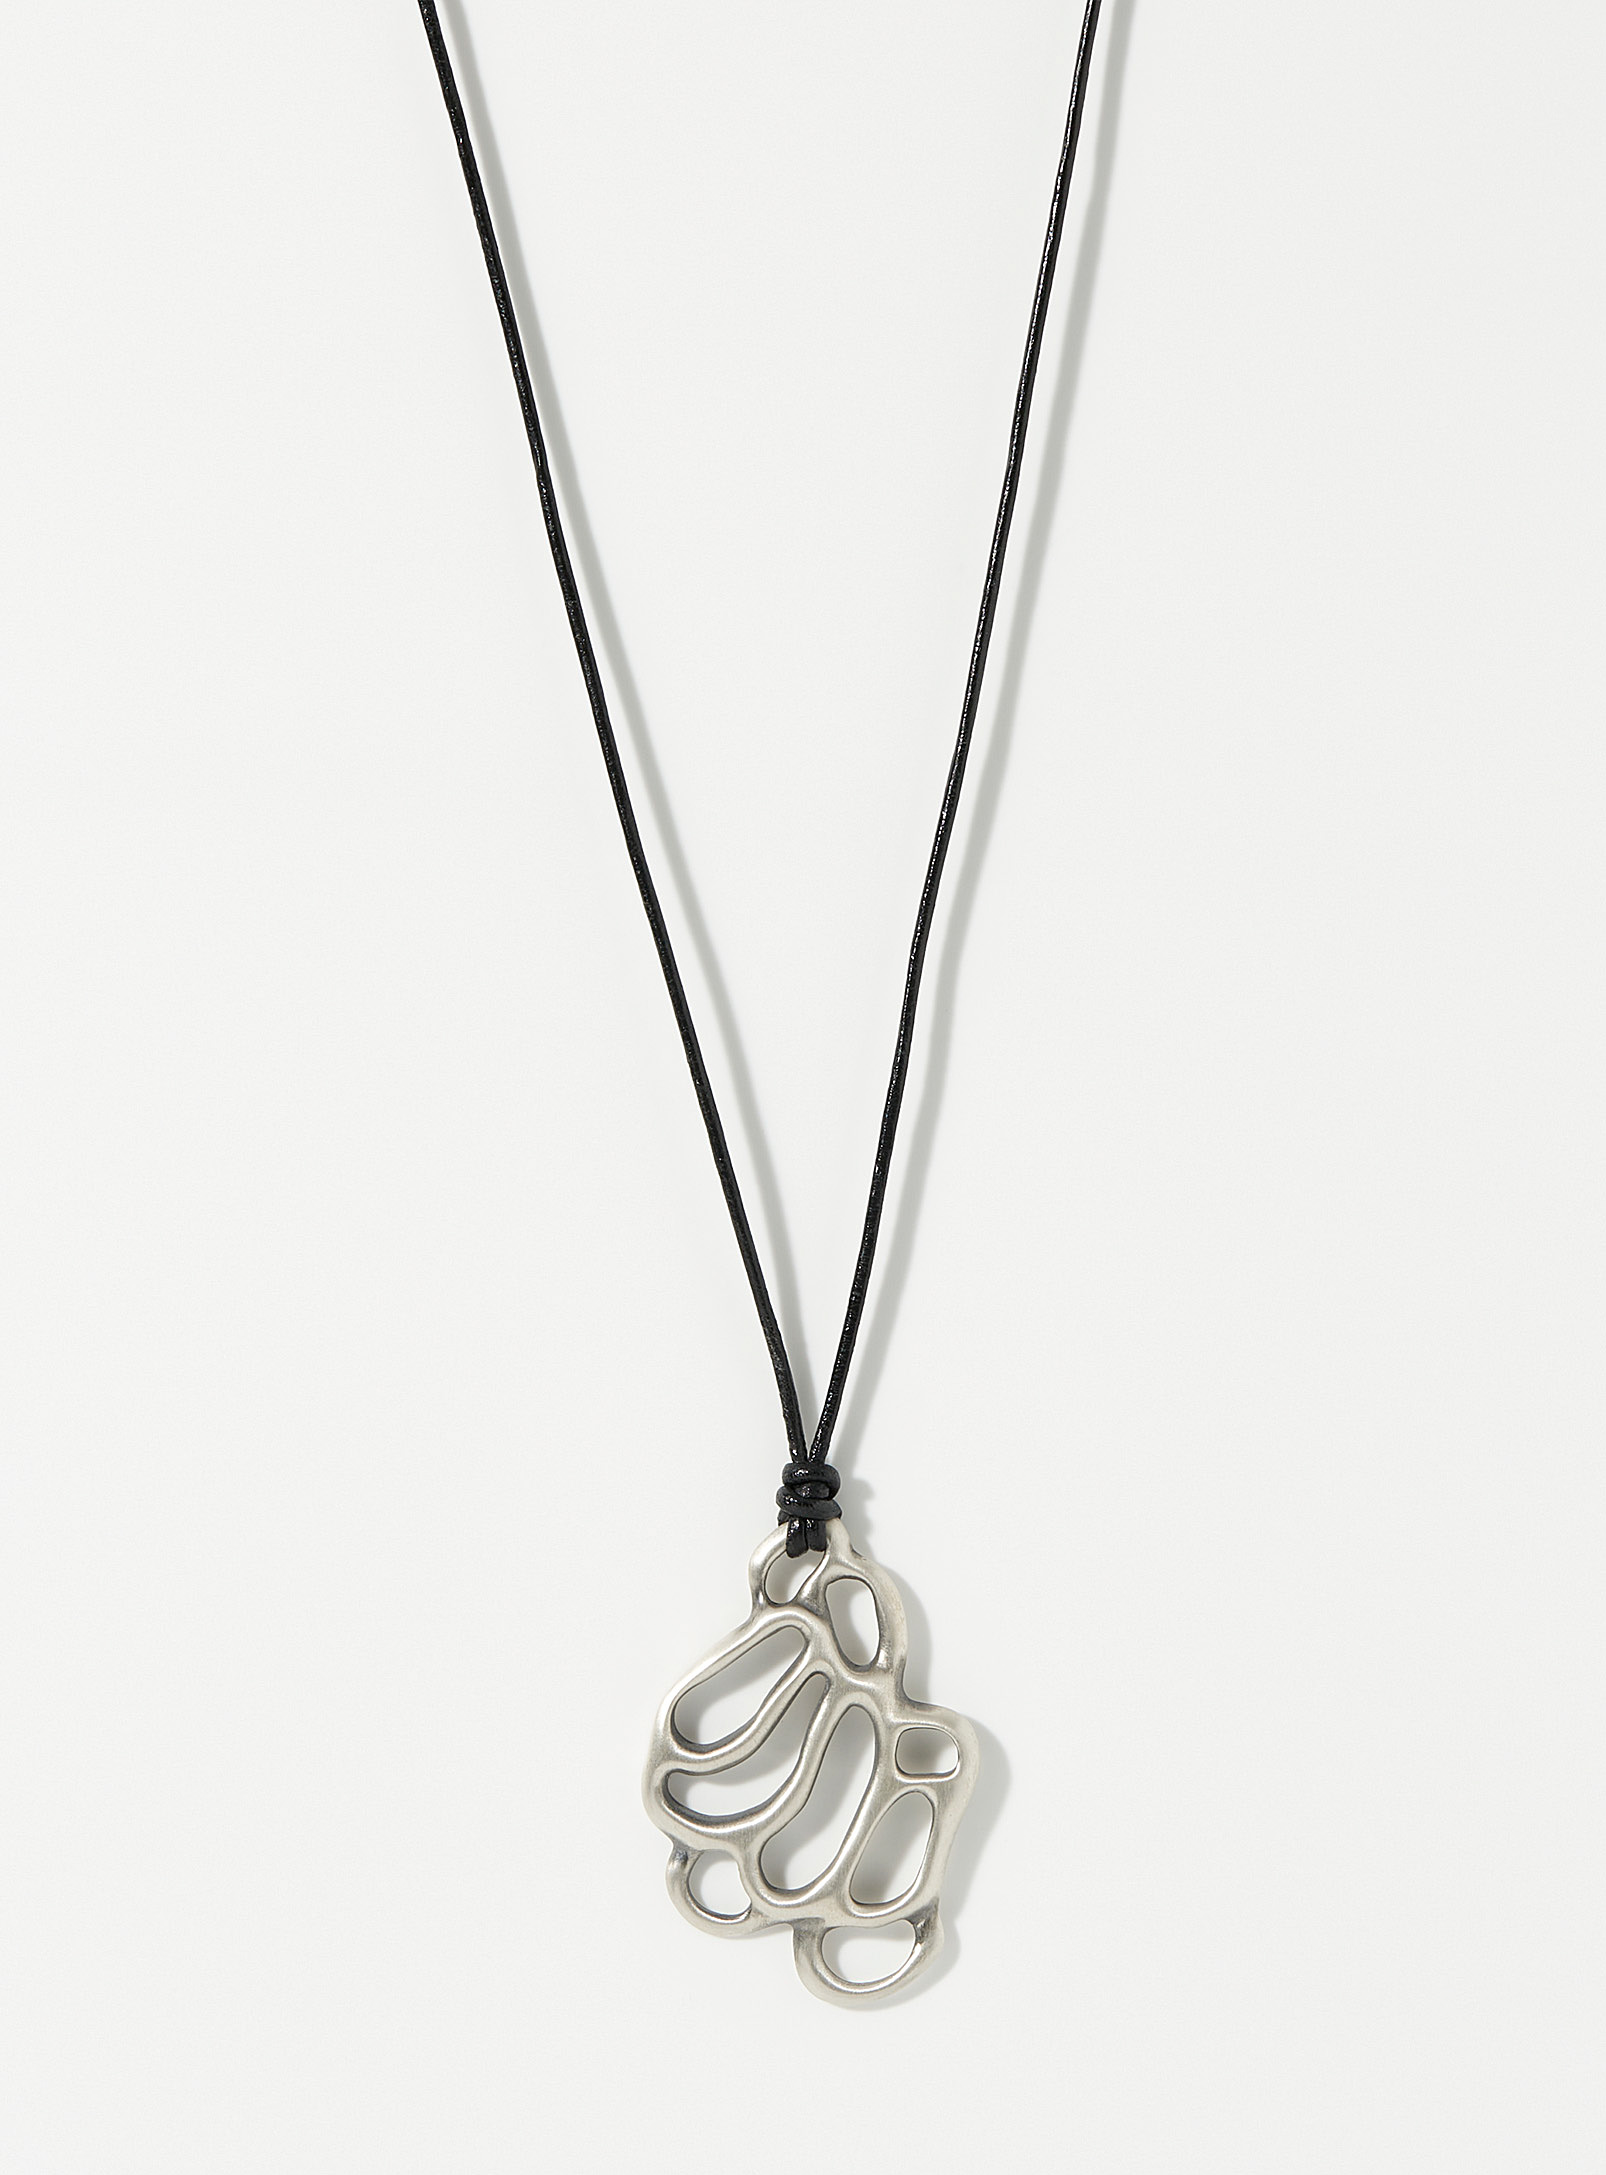 Paul Edward - Men's Curio sterling silver pendant necklace